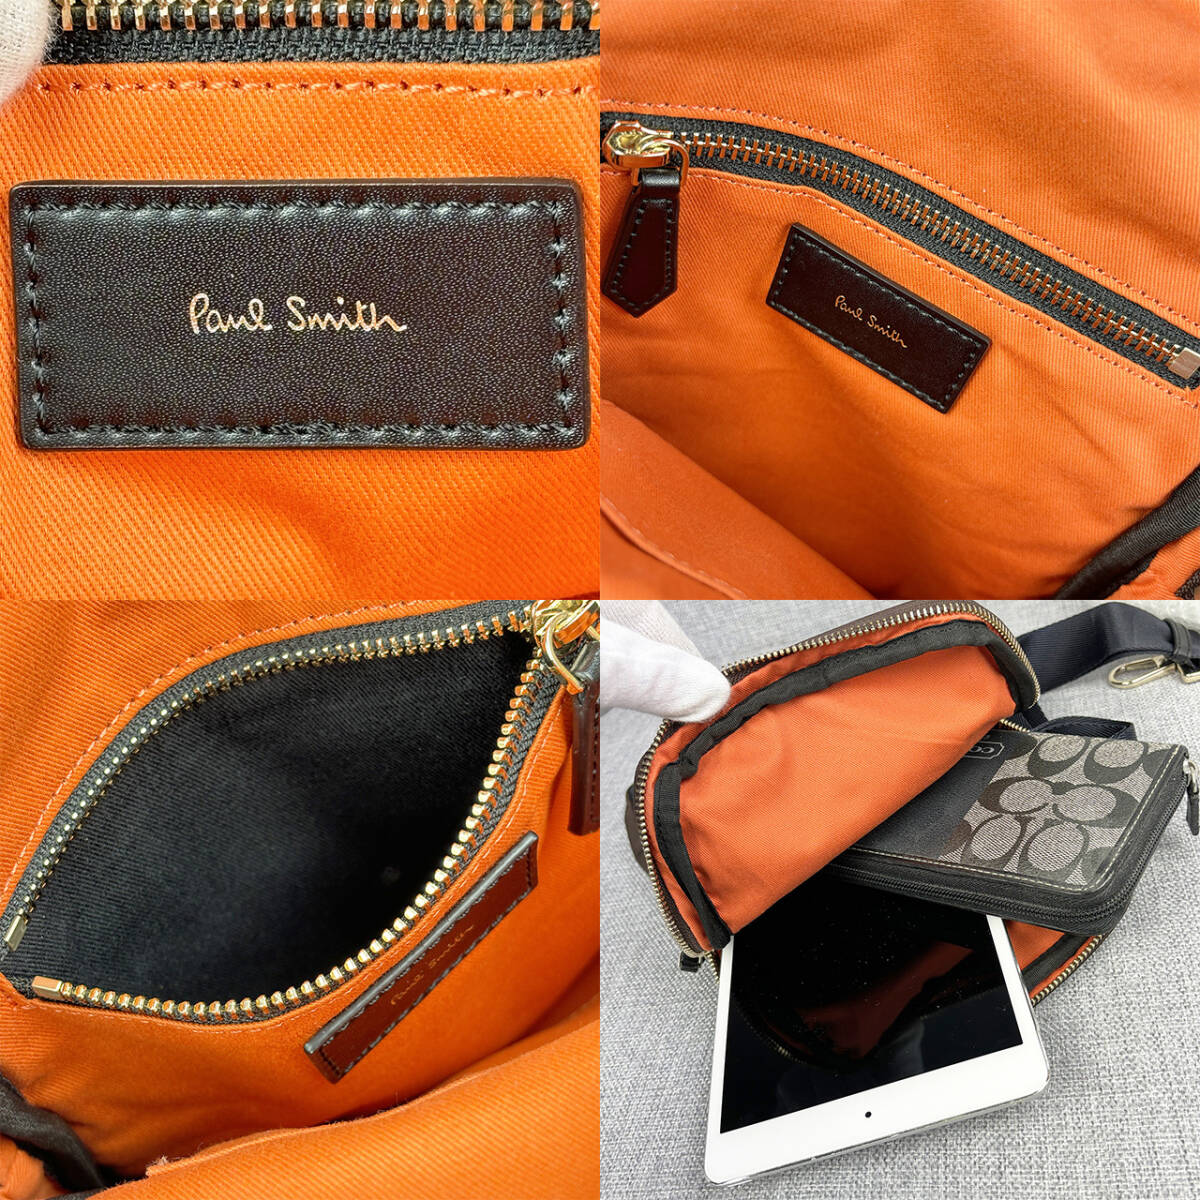  unused *Paul Smith Paul Smith men's body bag PSN310 nylon & original leather navy blue × dense brown × orange 